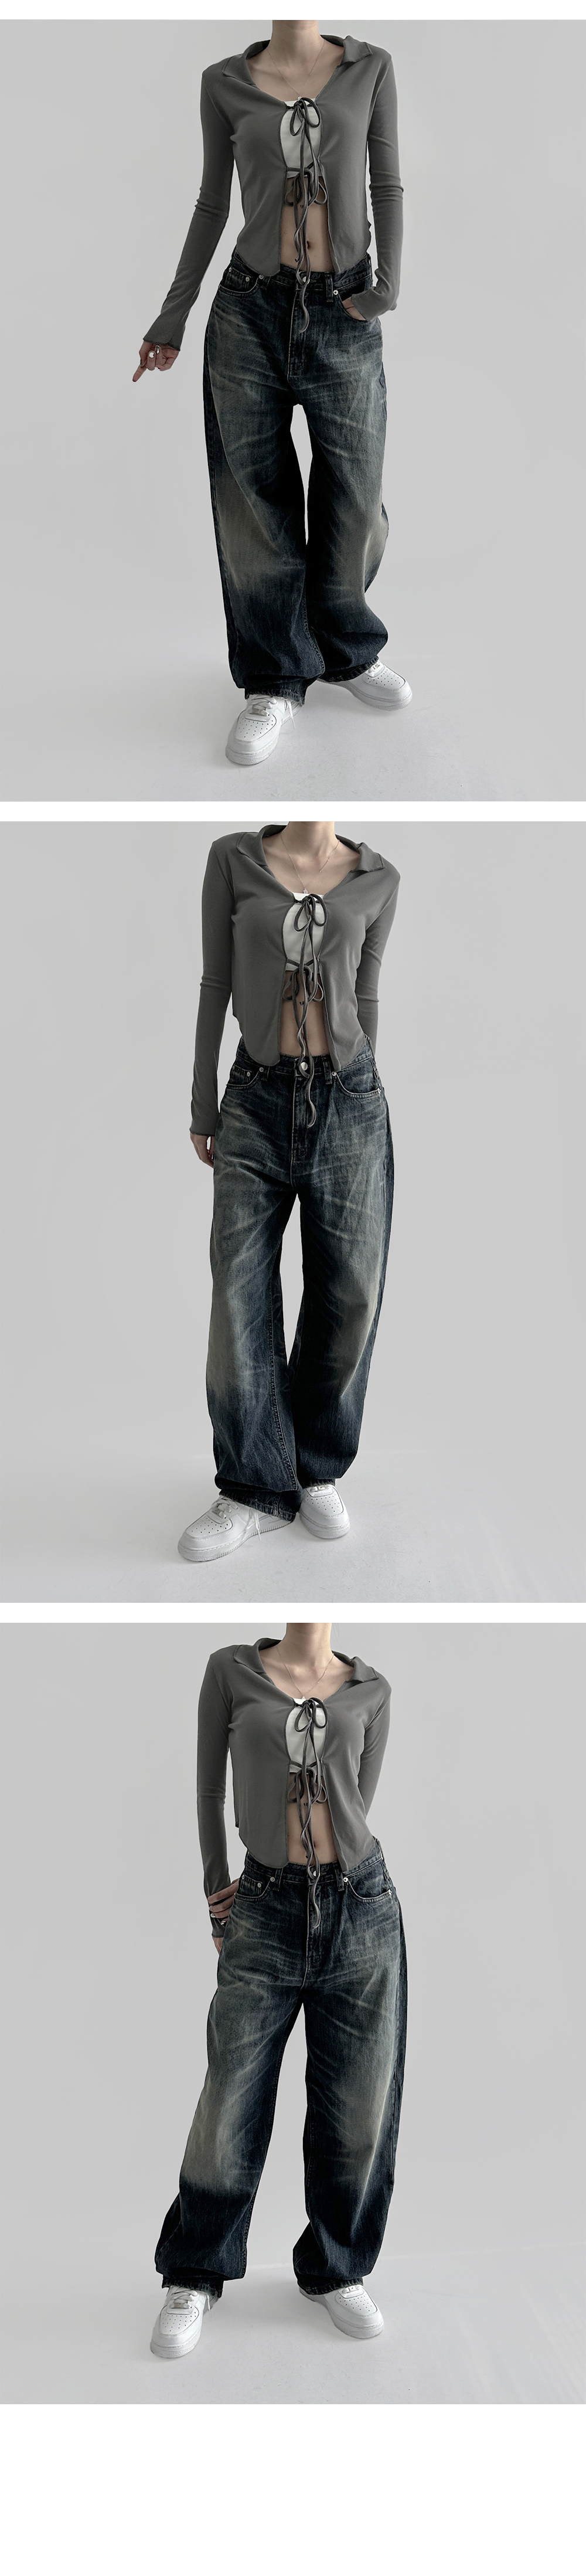 suspenders skirt/pants charcoal color image-S2L5